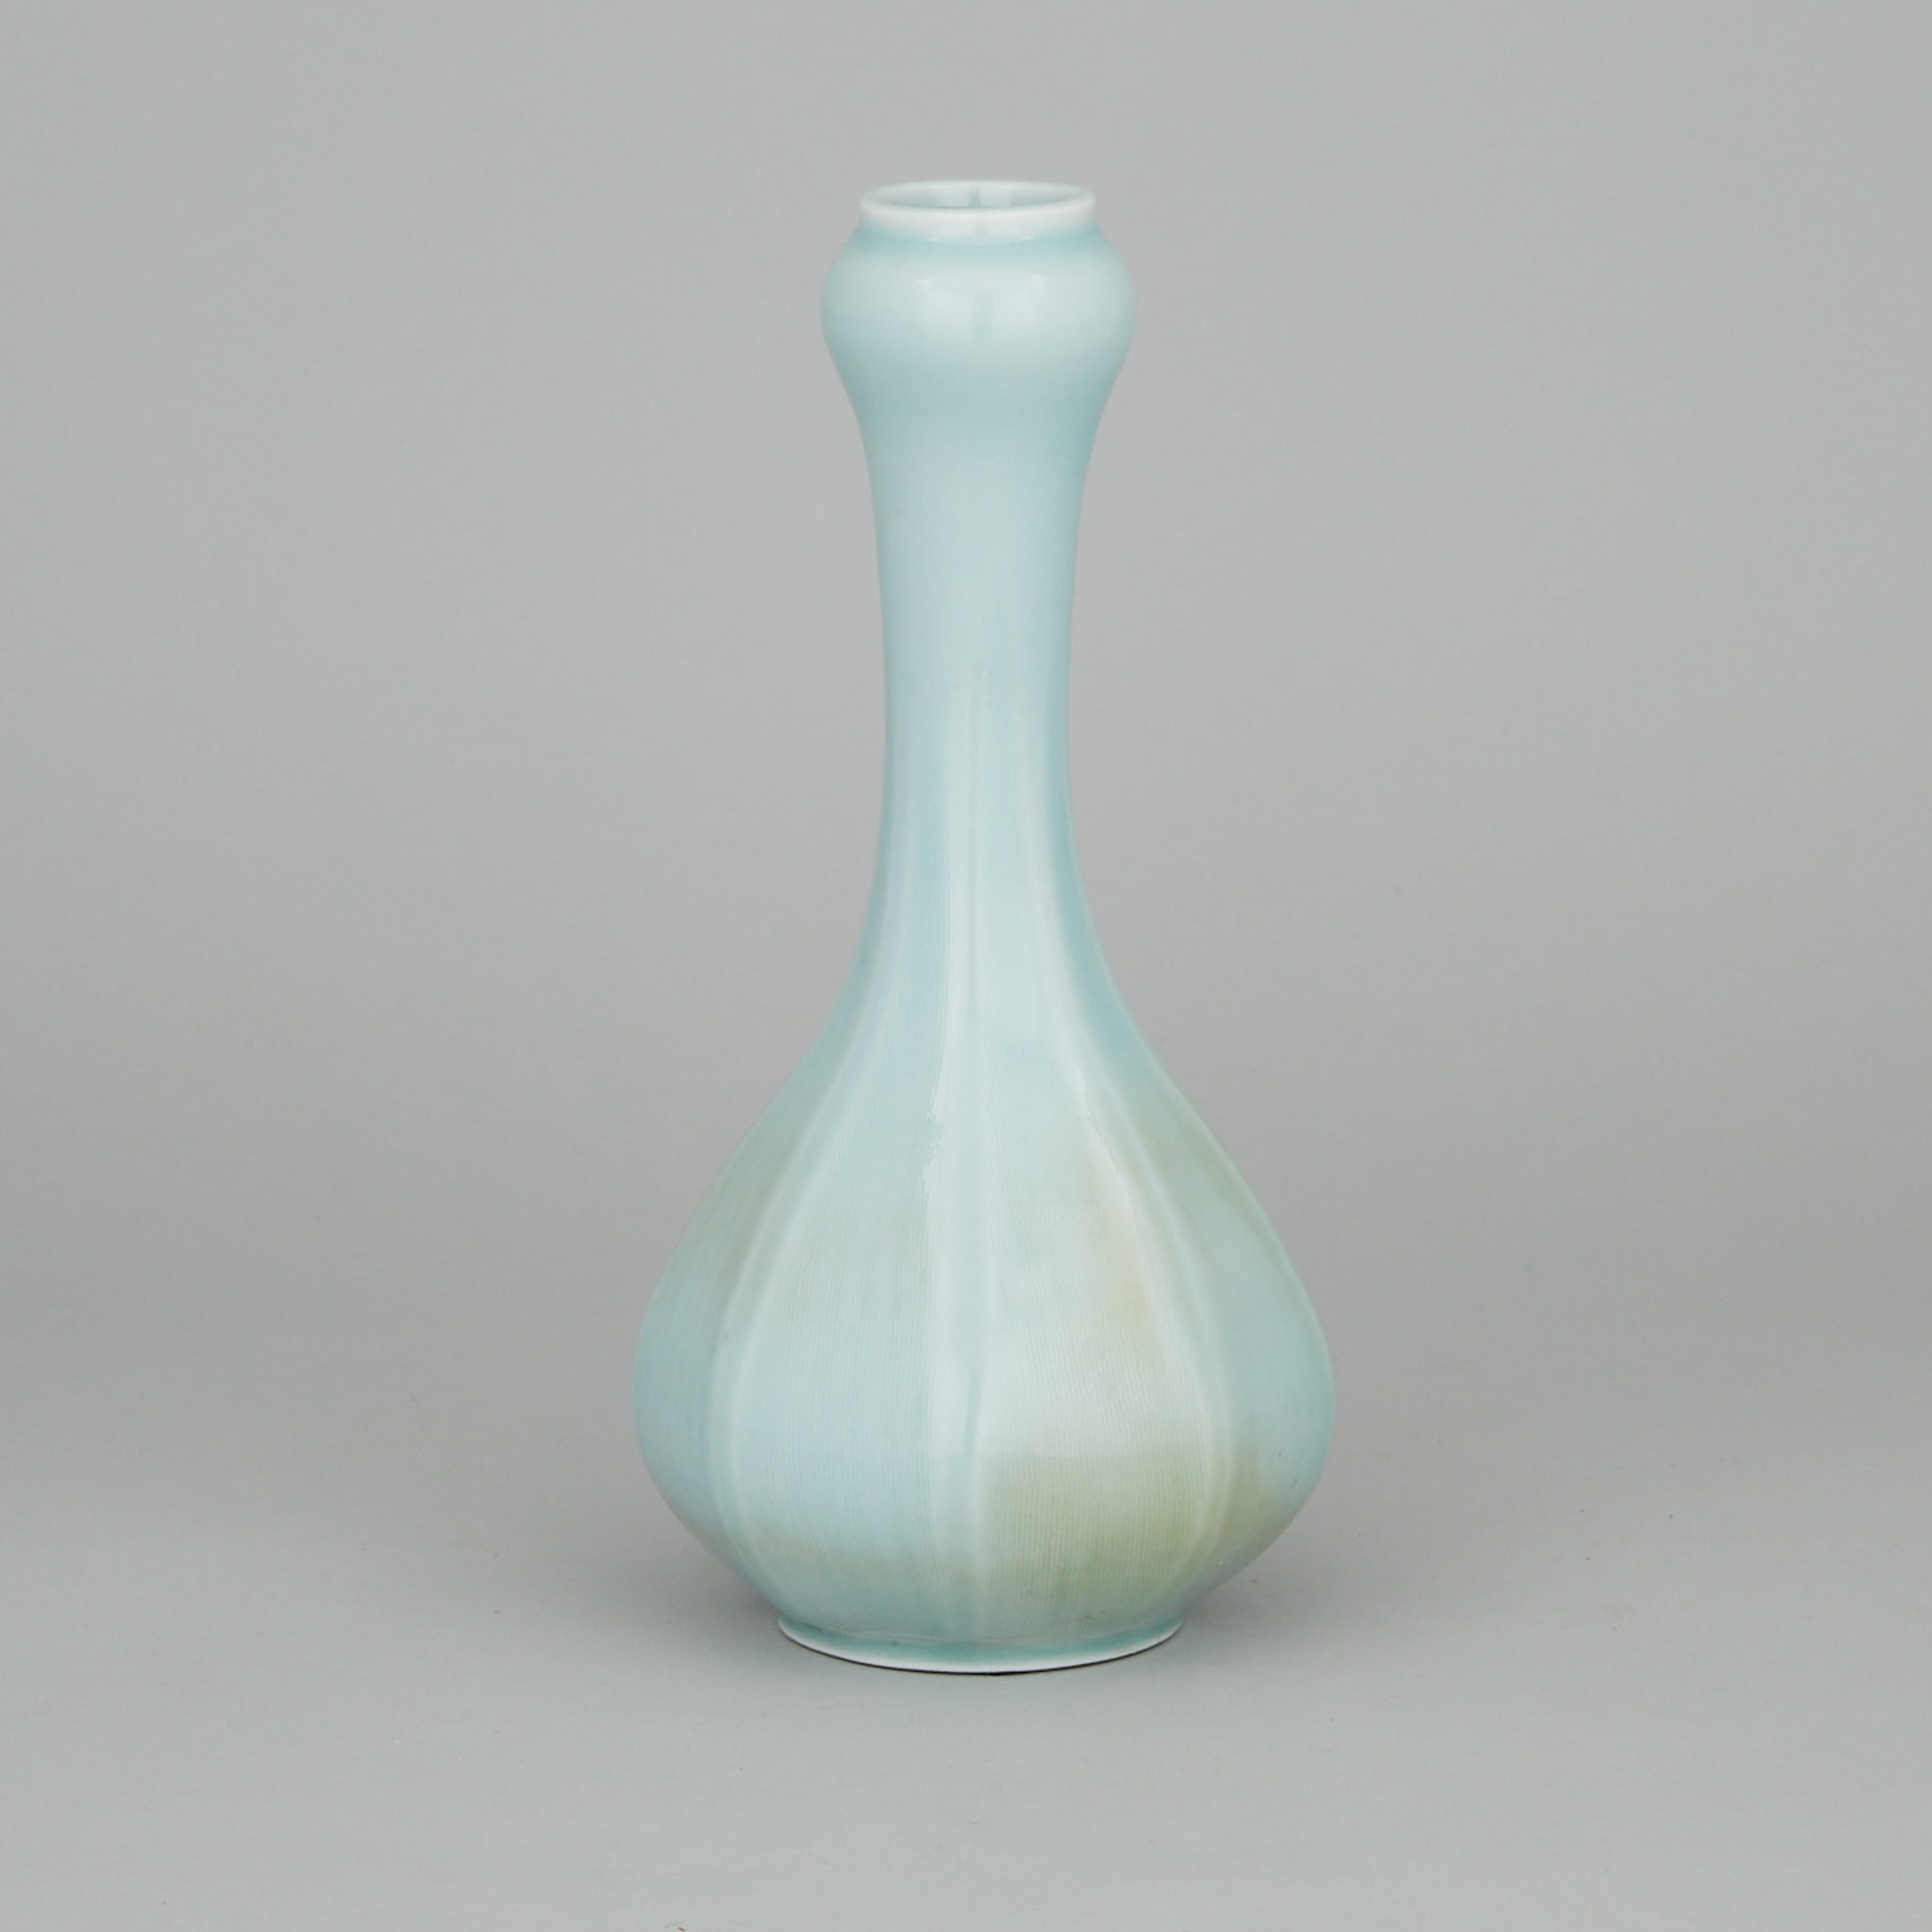 Harlan House (Canadian, b.1943), Celadon Glazed Vase, 1981